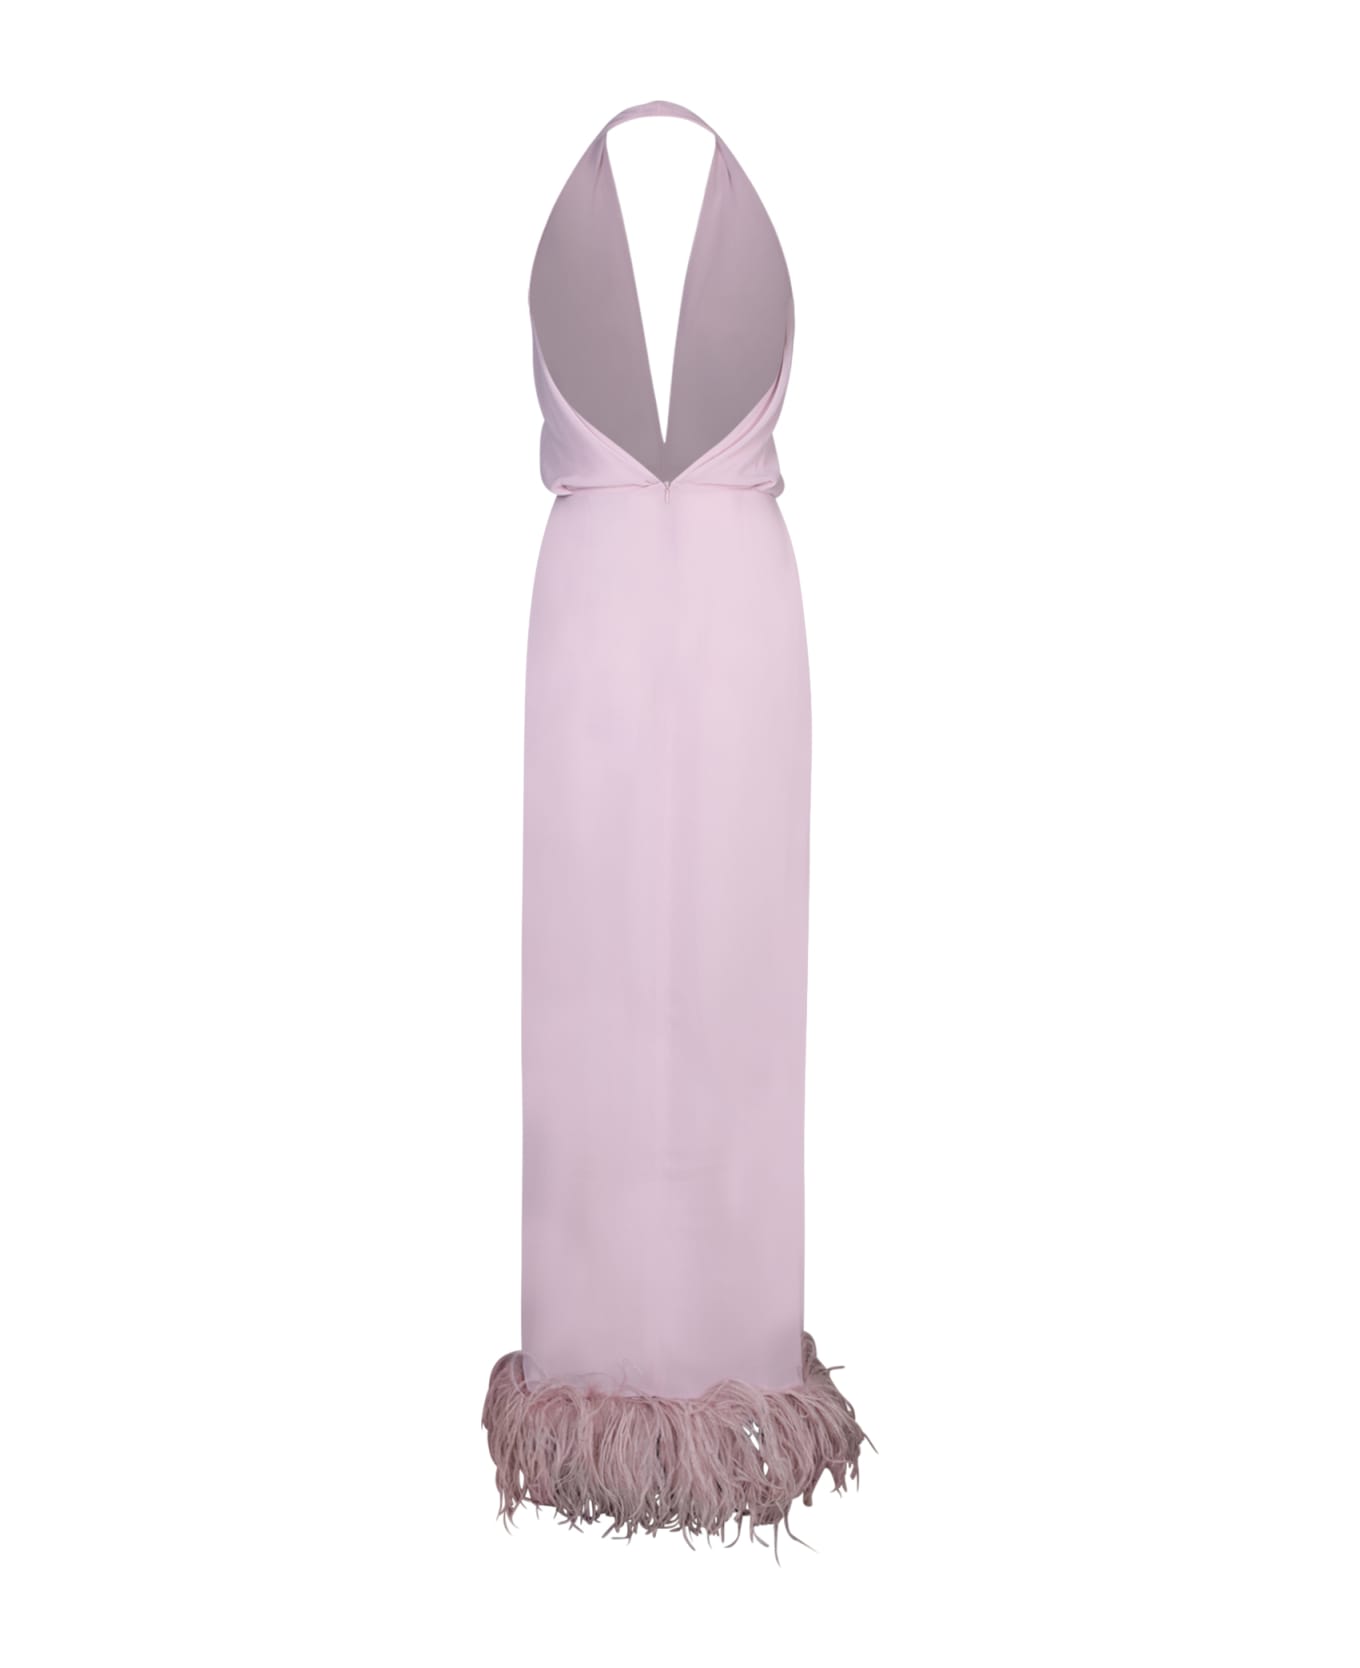 16arlington Isolde Mauve Dress - Pink